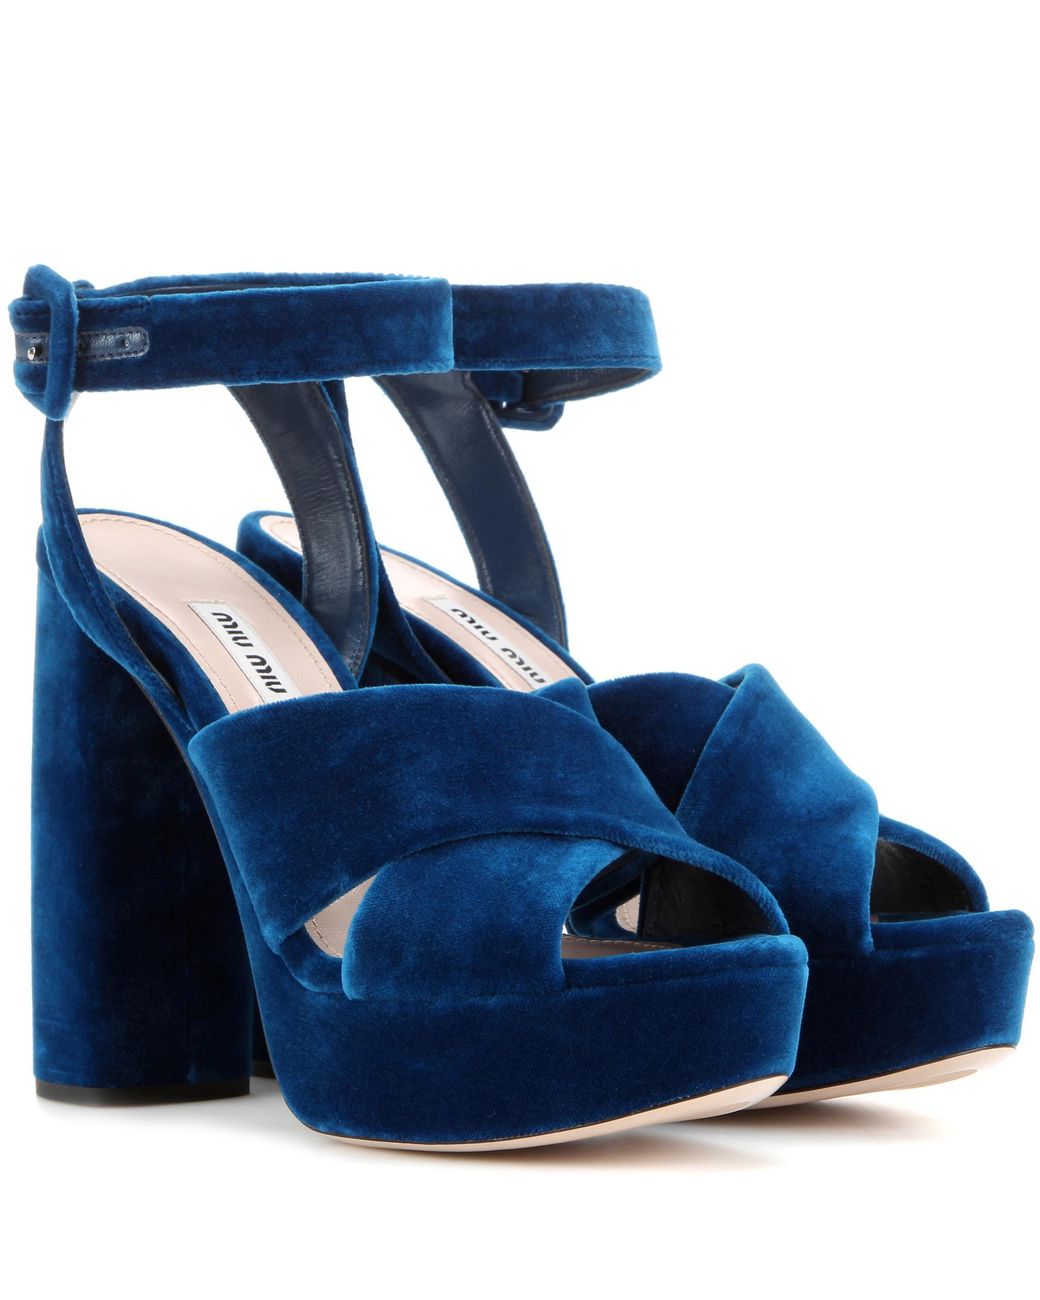 Miu Miu Velvet Platform Sandals in Blue | Lyst